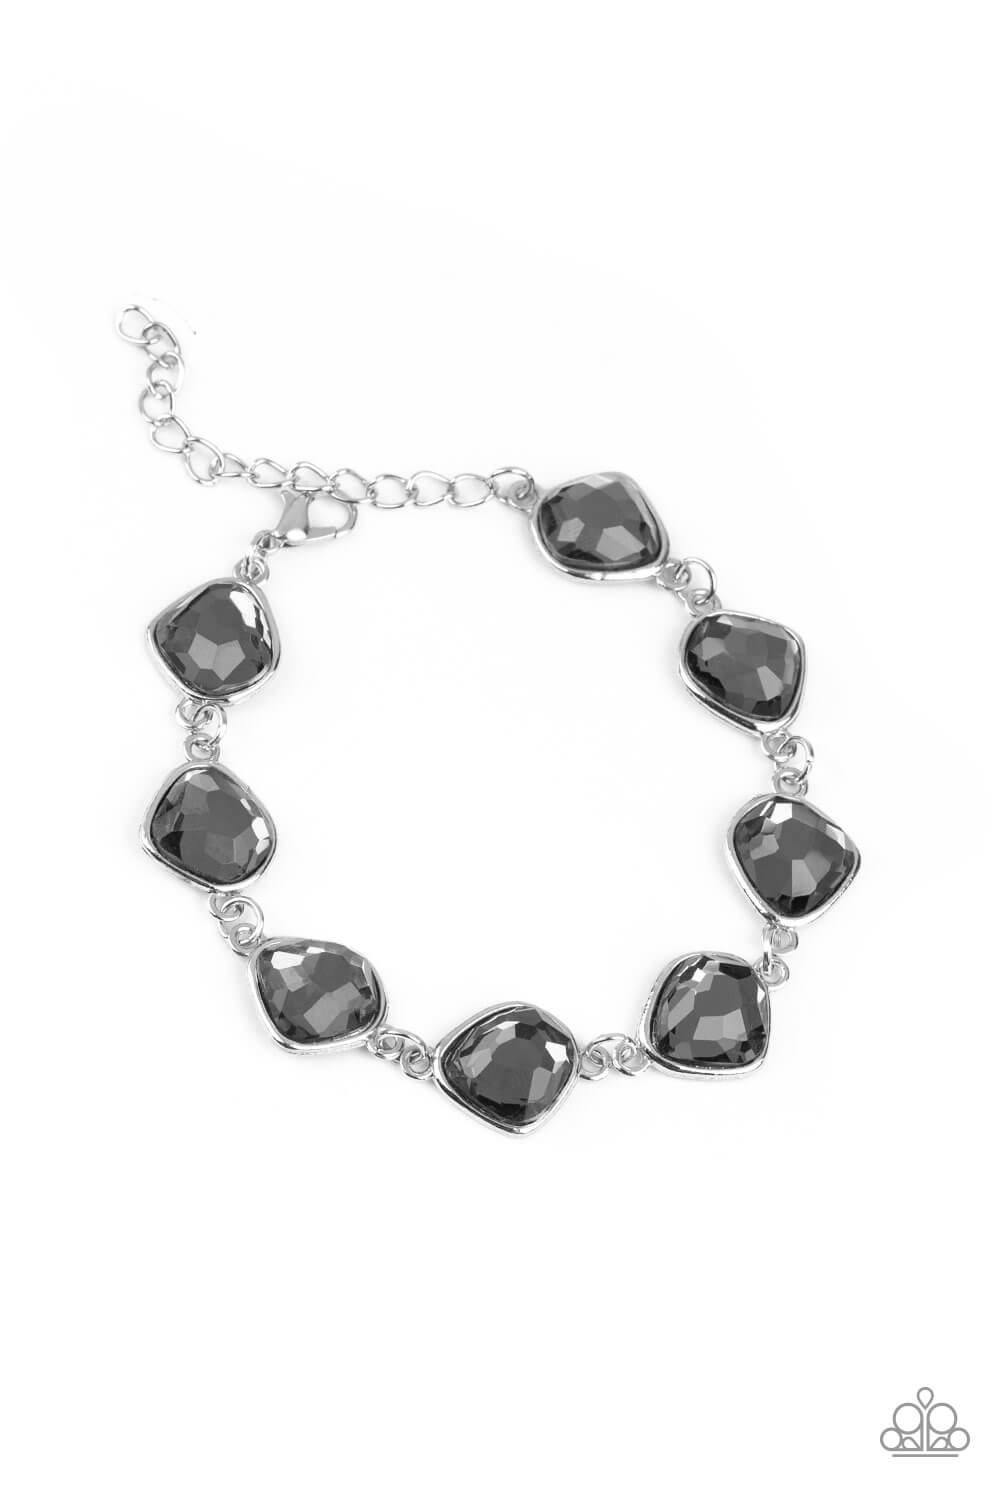 The Imperfectionist - Silver Gem Necklace Set & Bracelet Combo - Princess Glam Shop